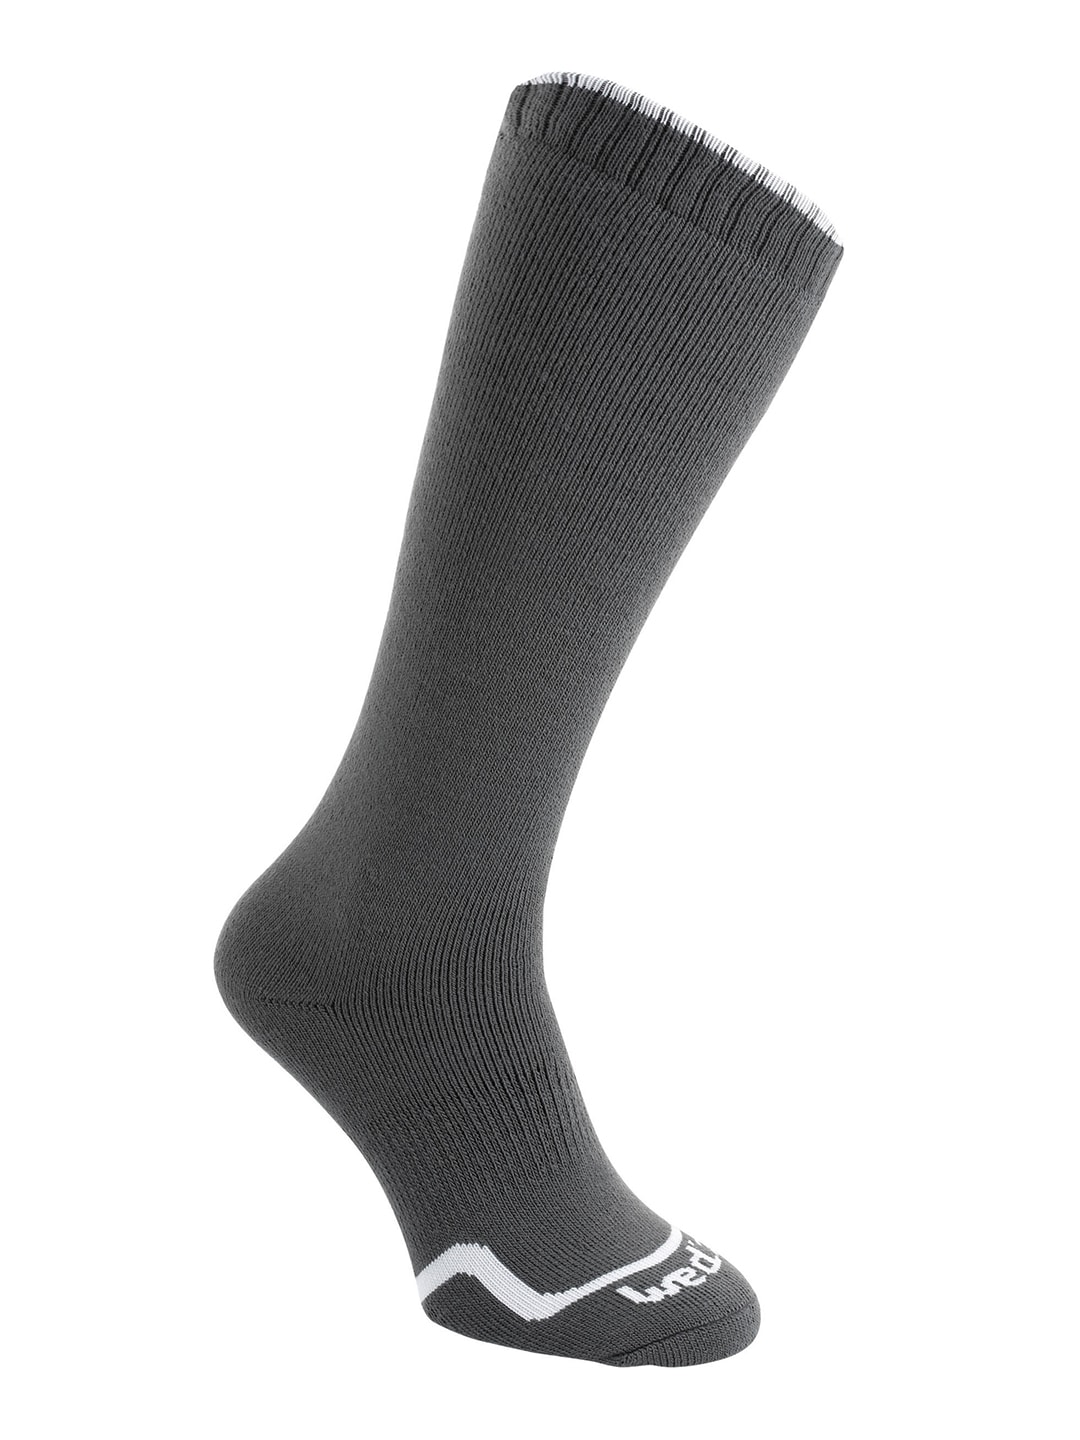 WEDZE By Decathlon Unisex Grey & White Patterned Calf-Length Ski Socks Price in India